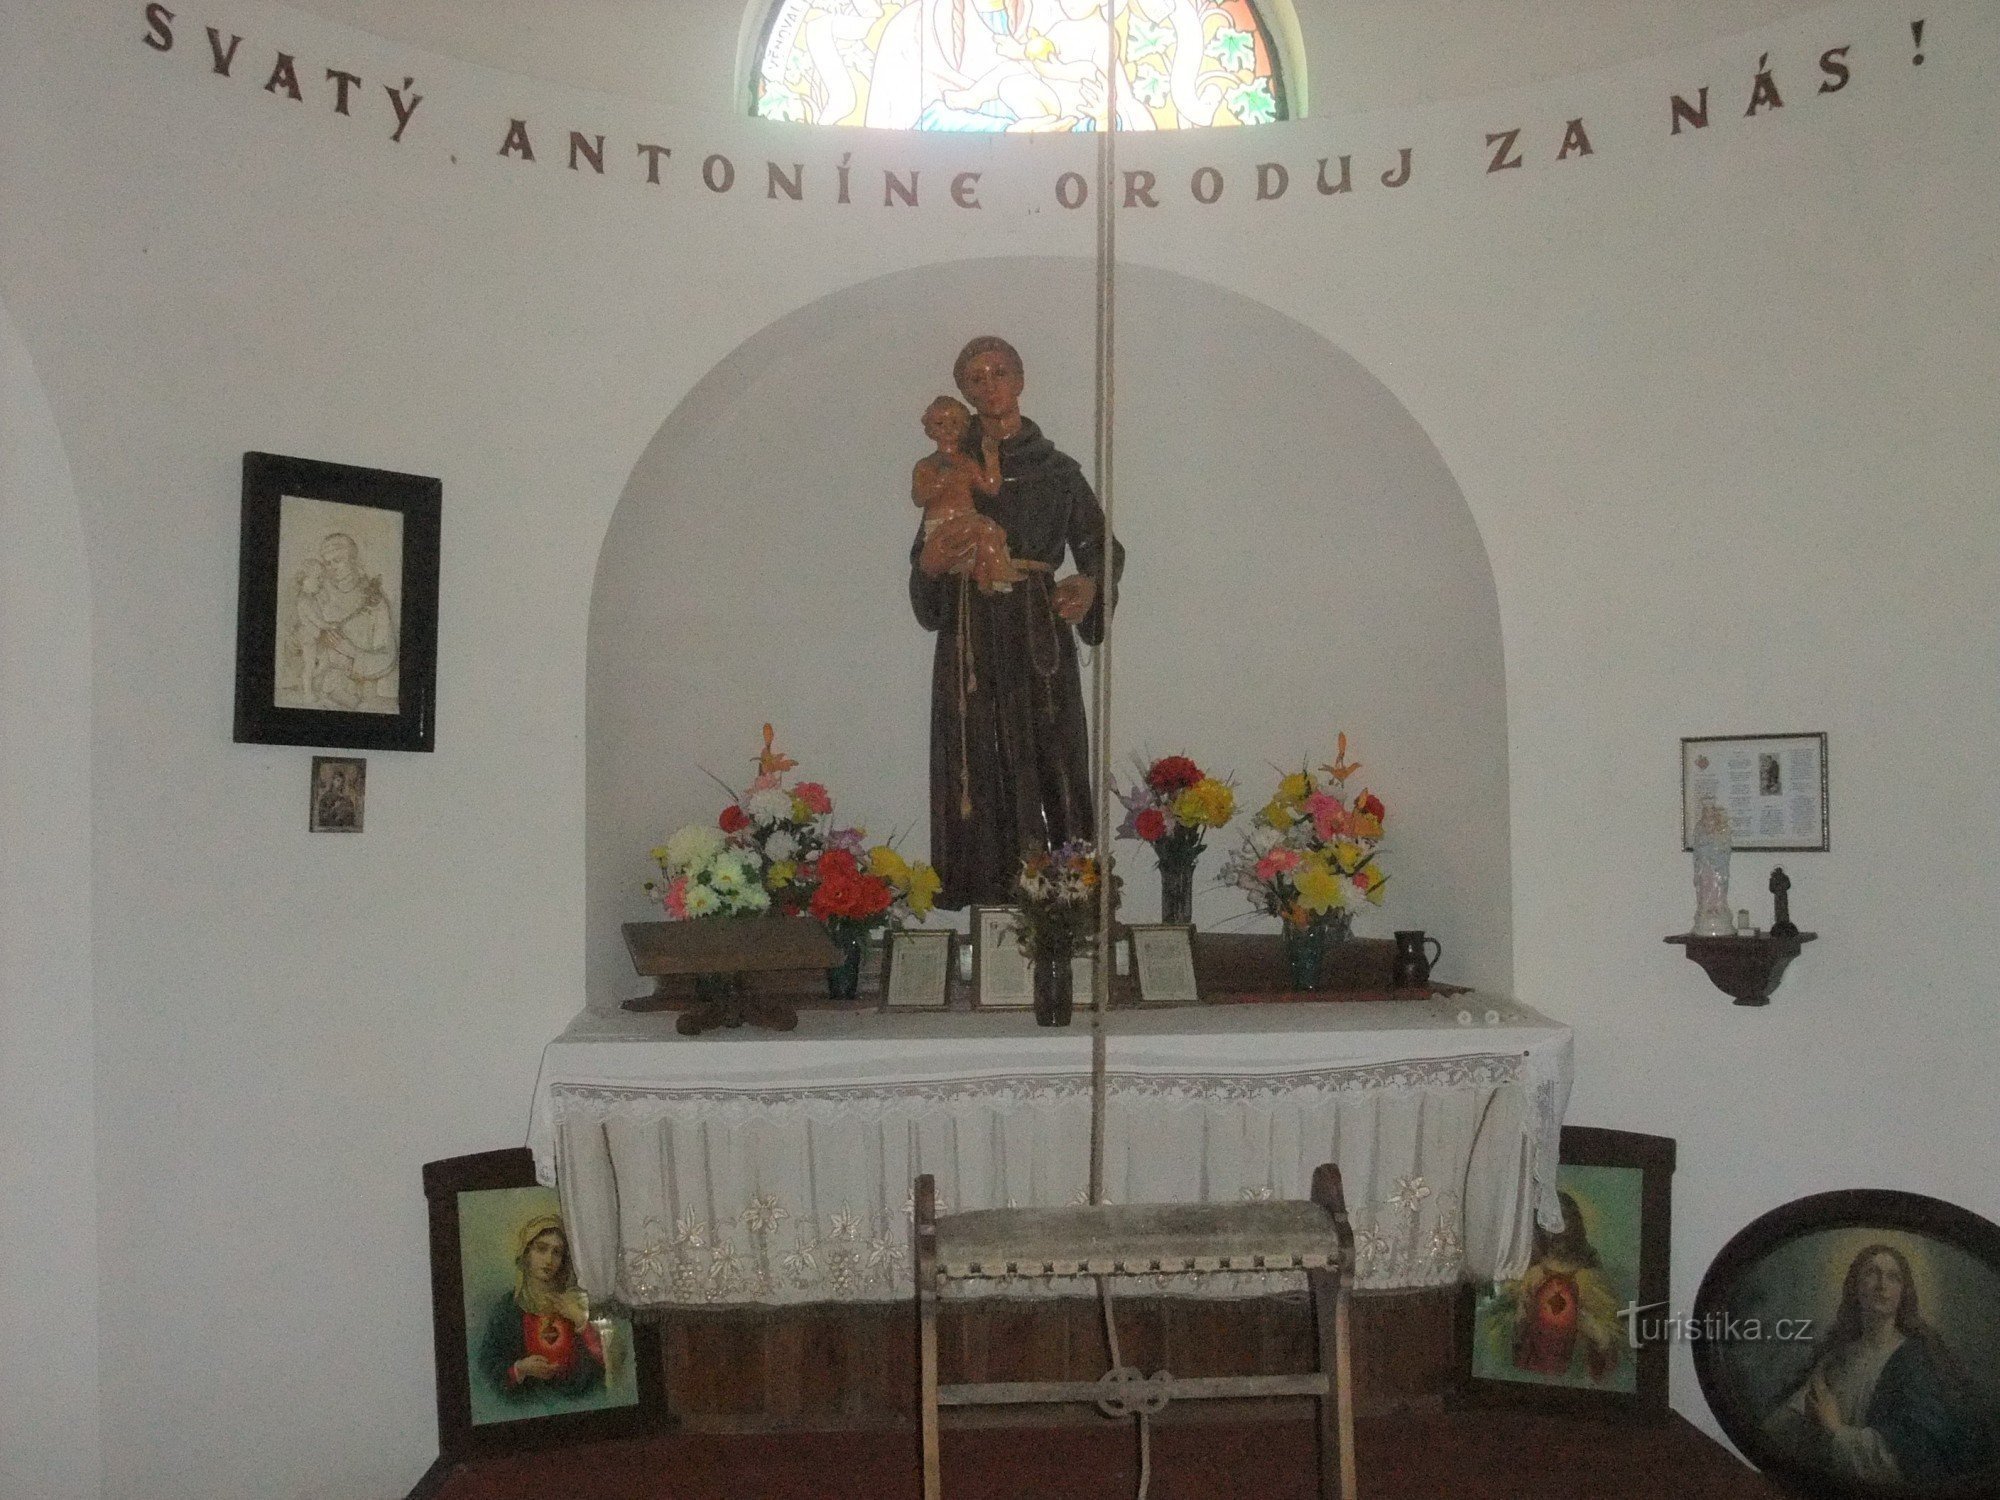 Chapel of St. Antonín Paduánský - a look inside